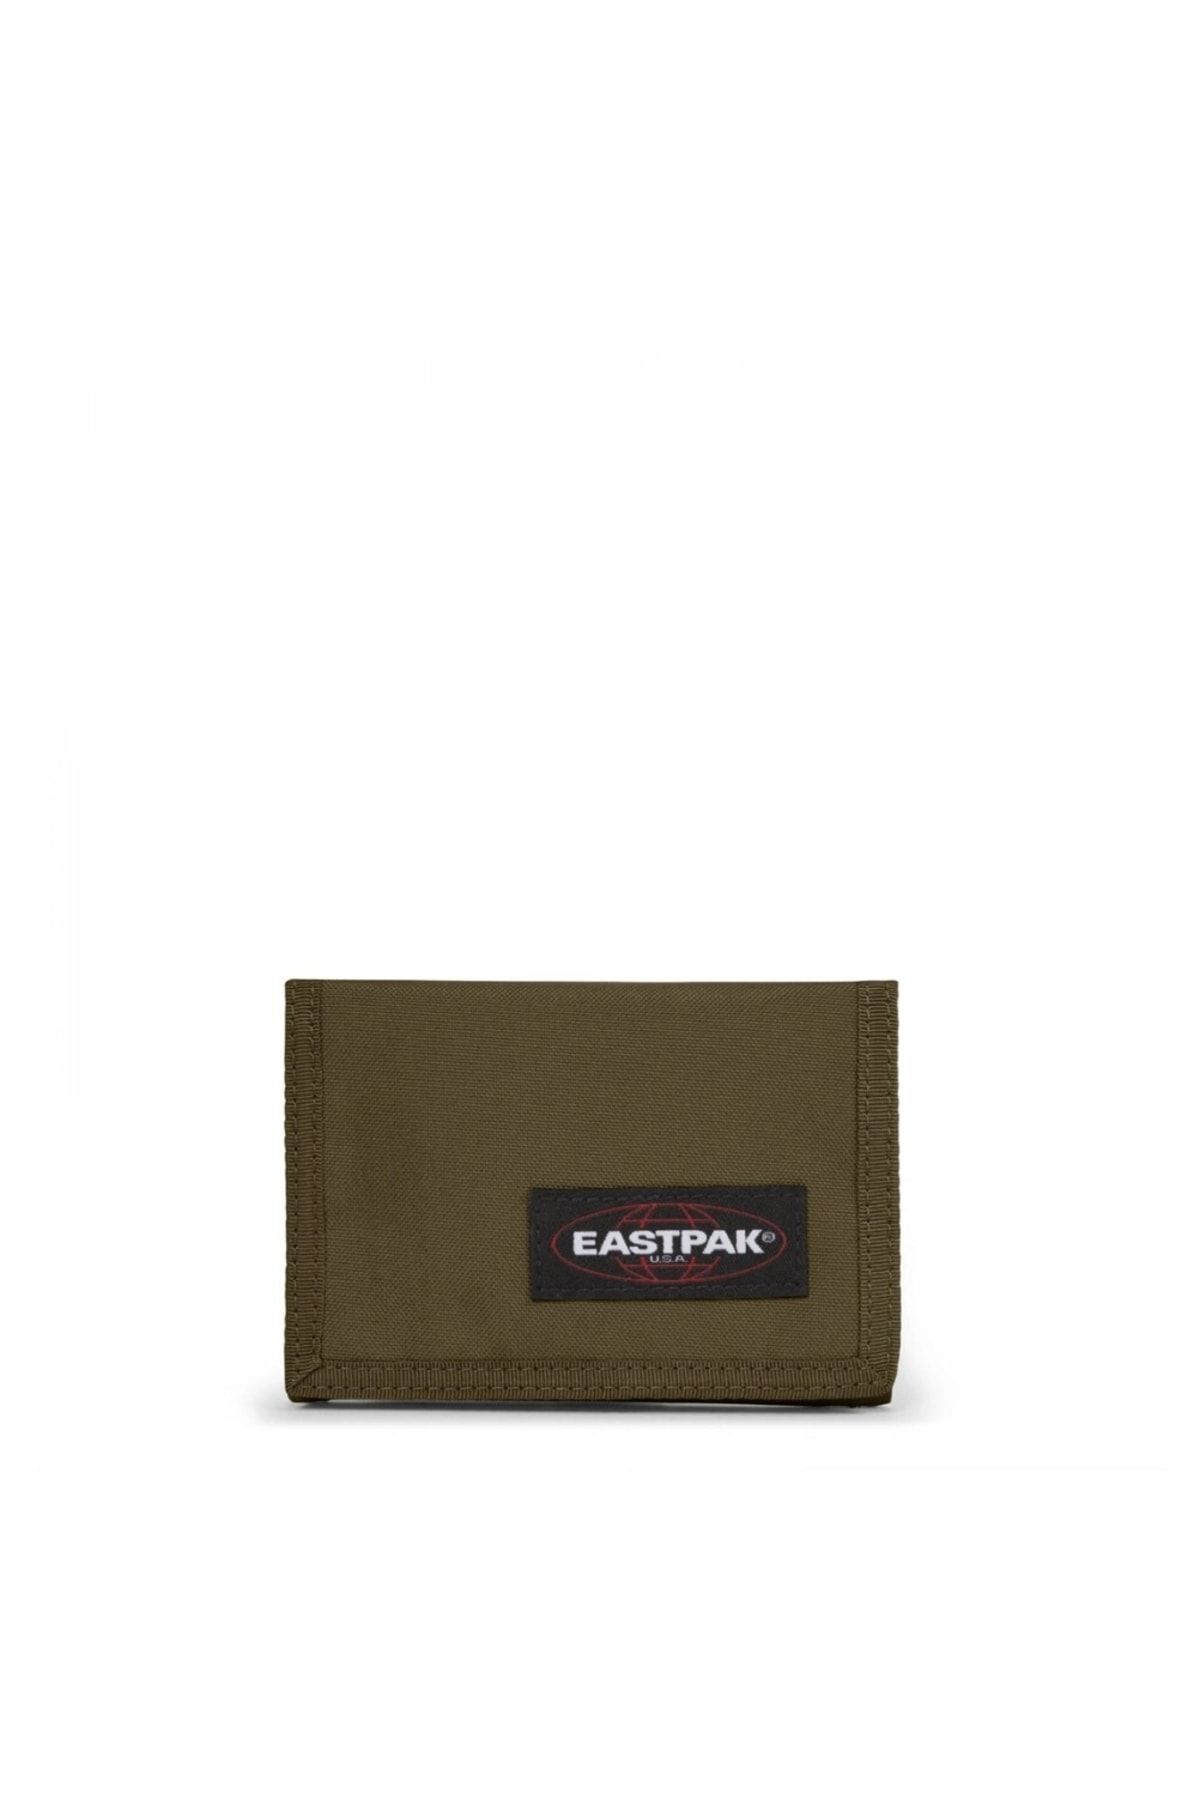 Eastpak Crew Single - Ek000371j321